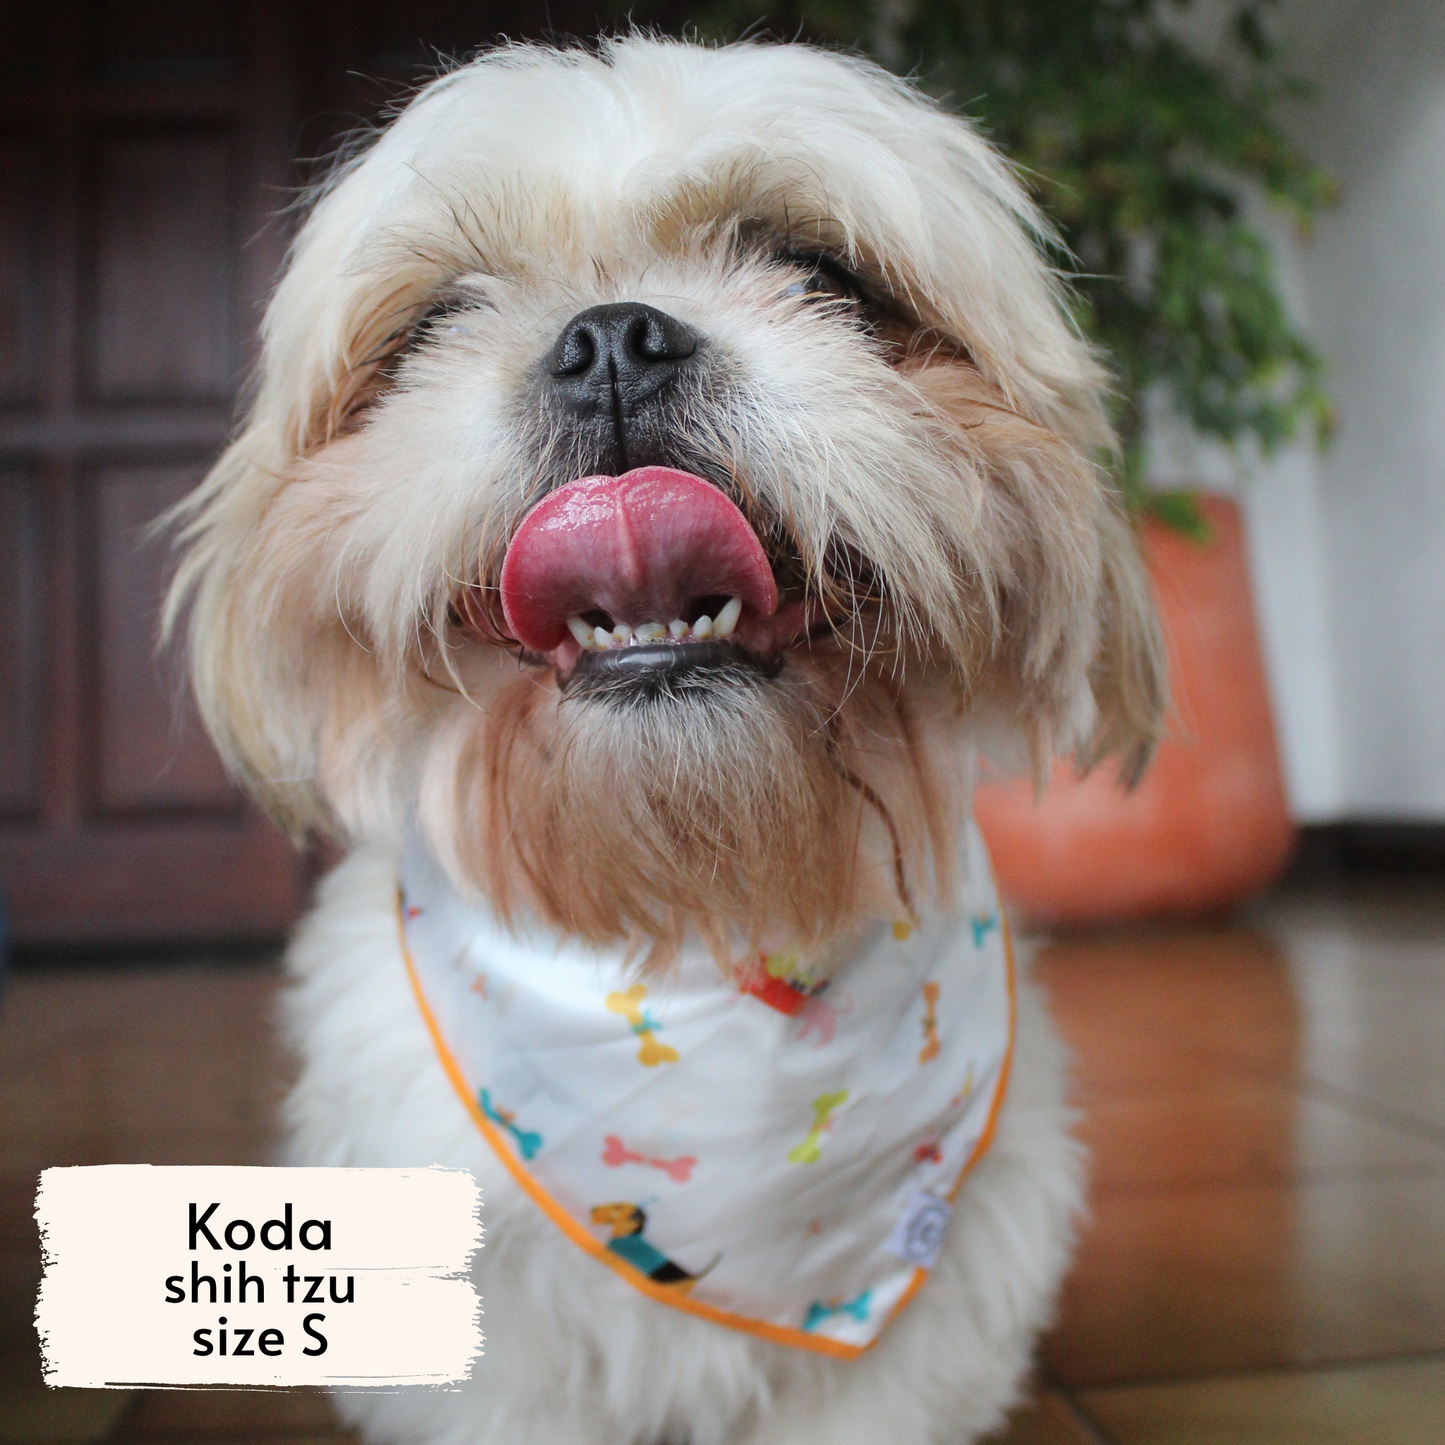 Pata Paw Pawty bandana as seen on a small dog, Koda, a shih tzu.